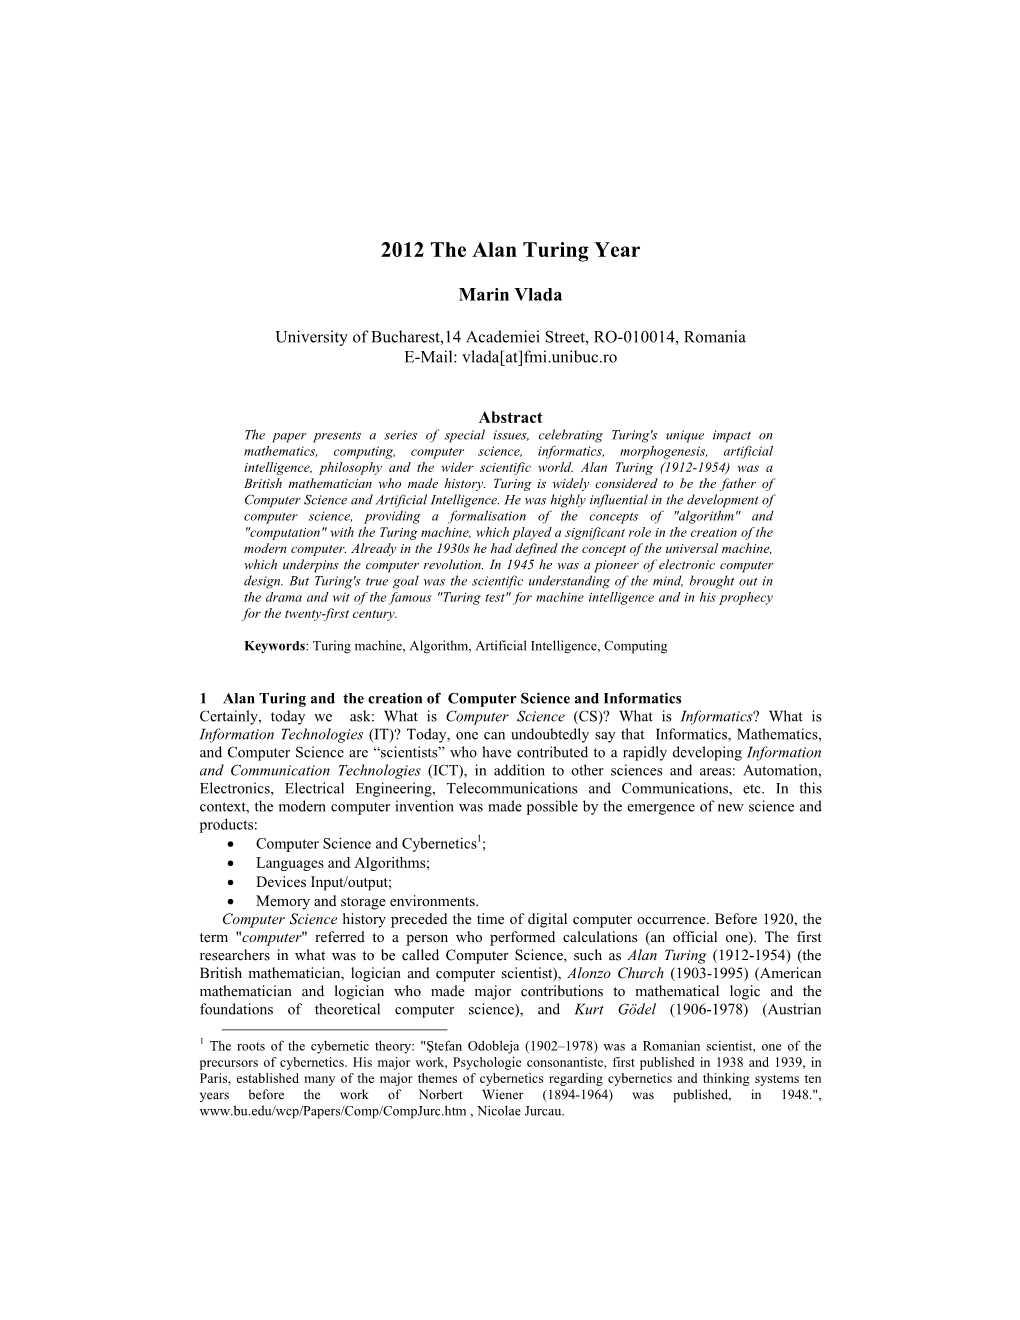 2012 the Alan Turing Year